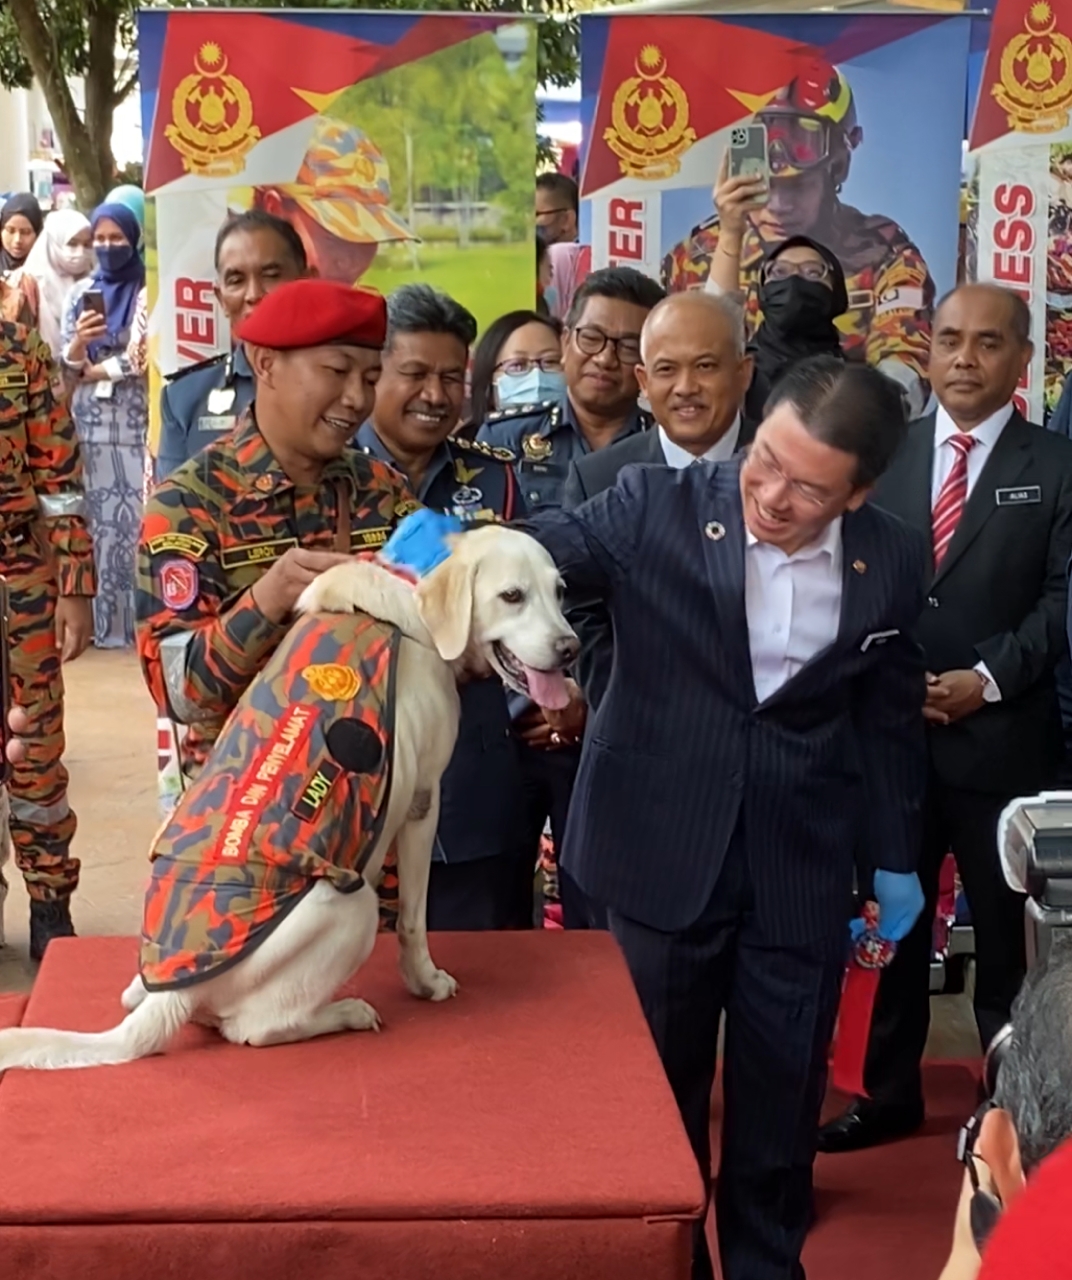 K9 dogs receive 'golden performance' medal by govt for helping in batang kali landslide rescue mission | weirdkaya